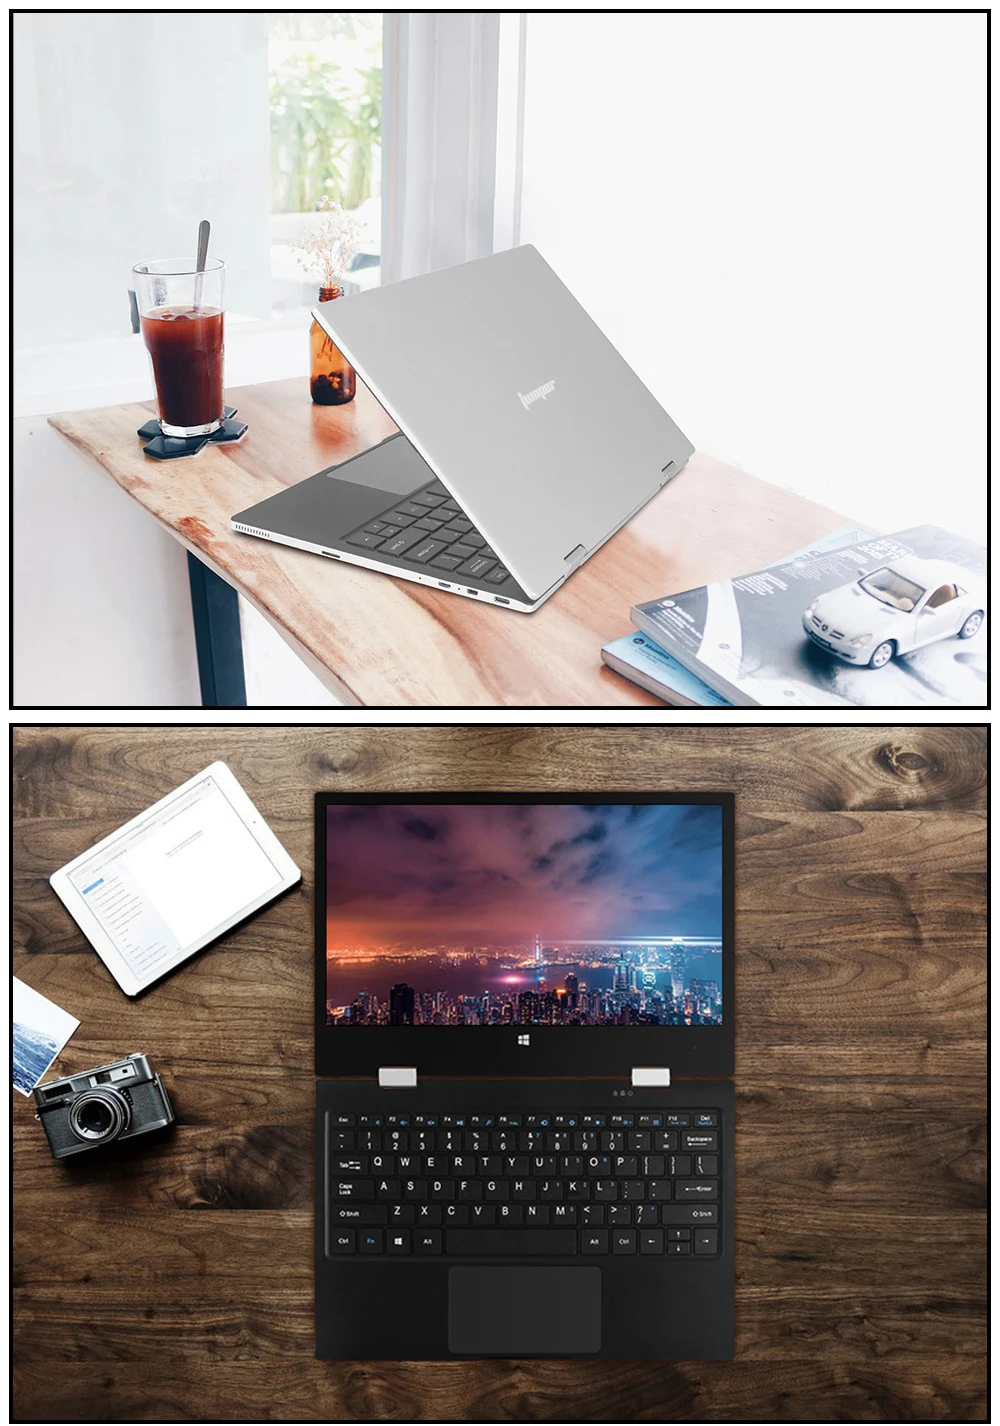 11,6 дюймов ips мульти сенсорный дисплей для ноутбука Apollo Lake N3350 ноутбук джемпер EZbook X1 ультрабук 4 Гб DDR4 64 Гб eMMC128GB SSD металл